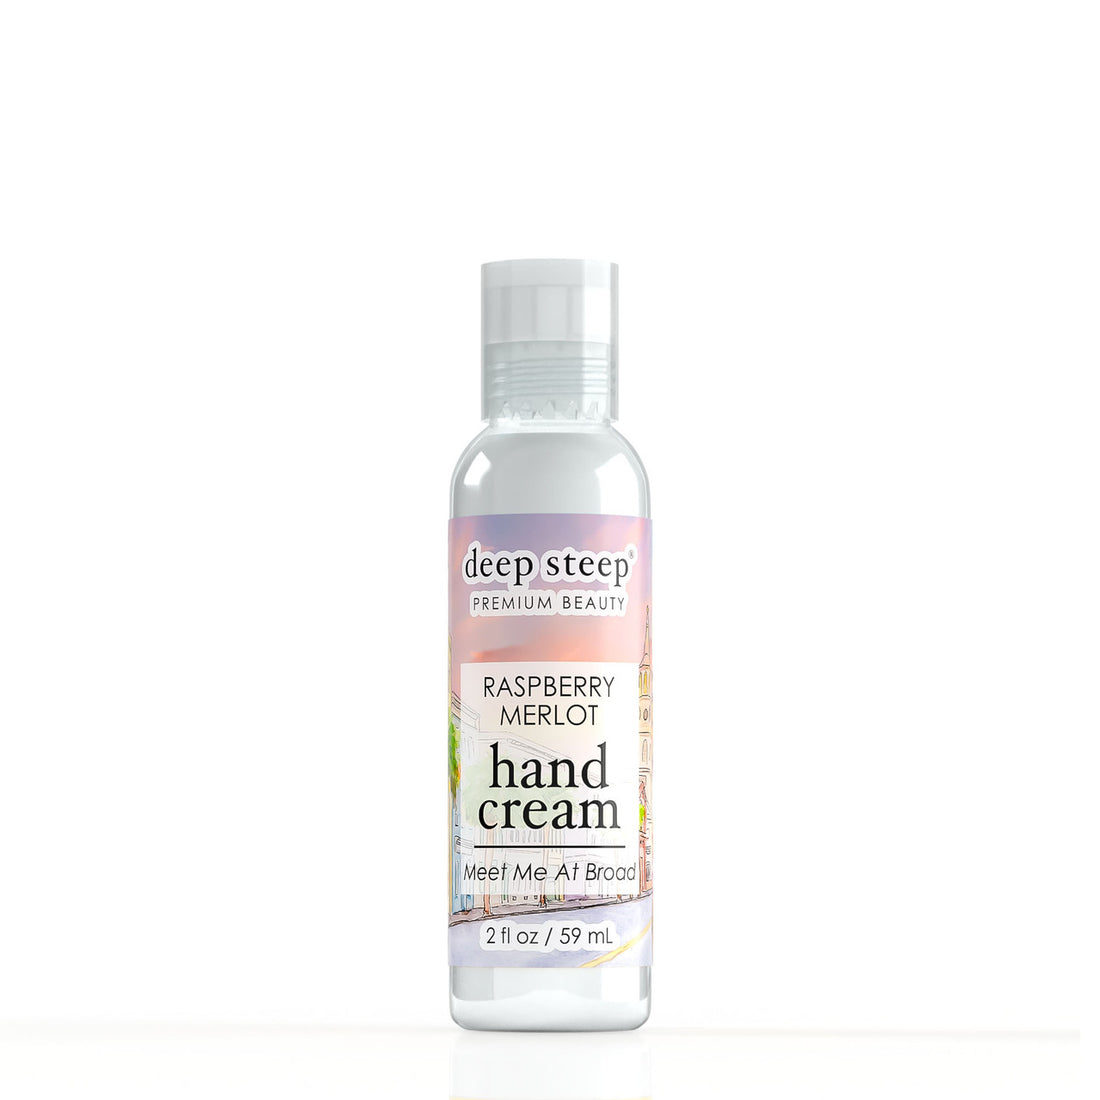 Raspberry Merlot (Meet Me At Broad) Hand Cream - 2oz - Front